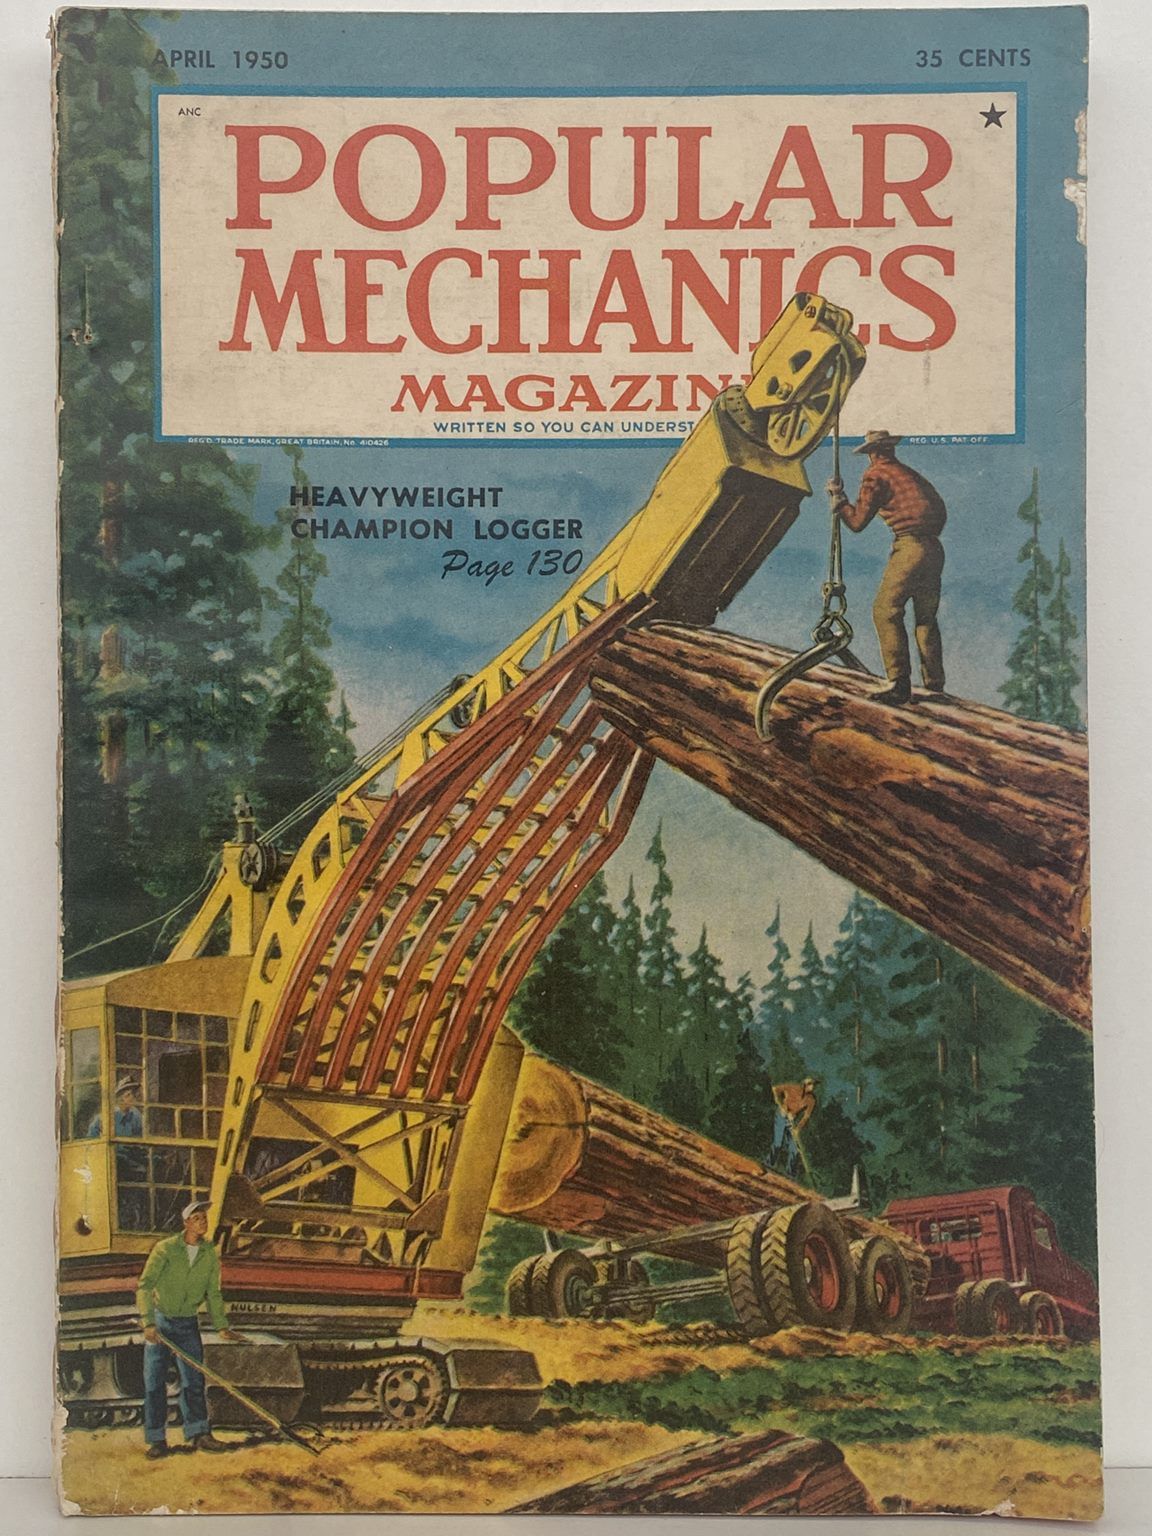 VINTAGE MAGAZINE: Popular Mechanics - Vol. 93, No. 4 - April 1950